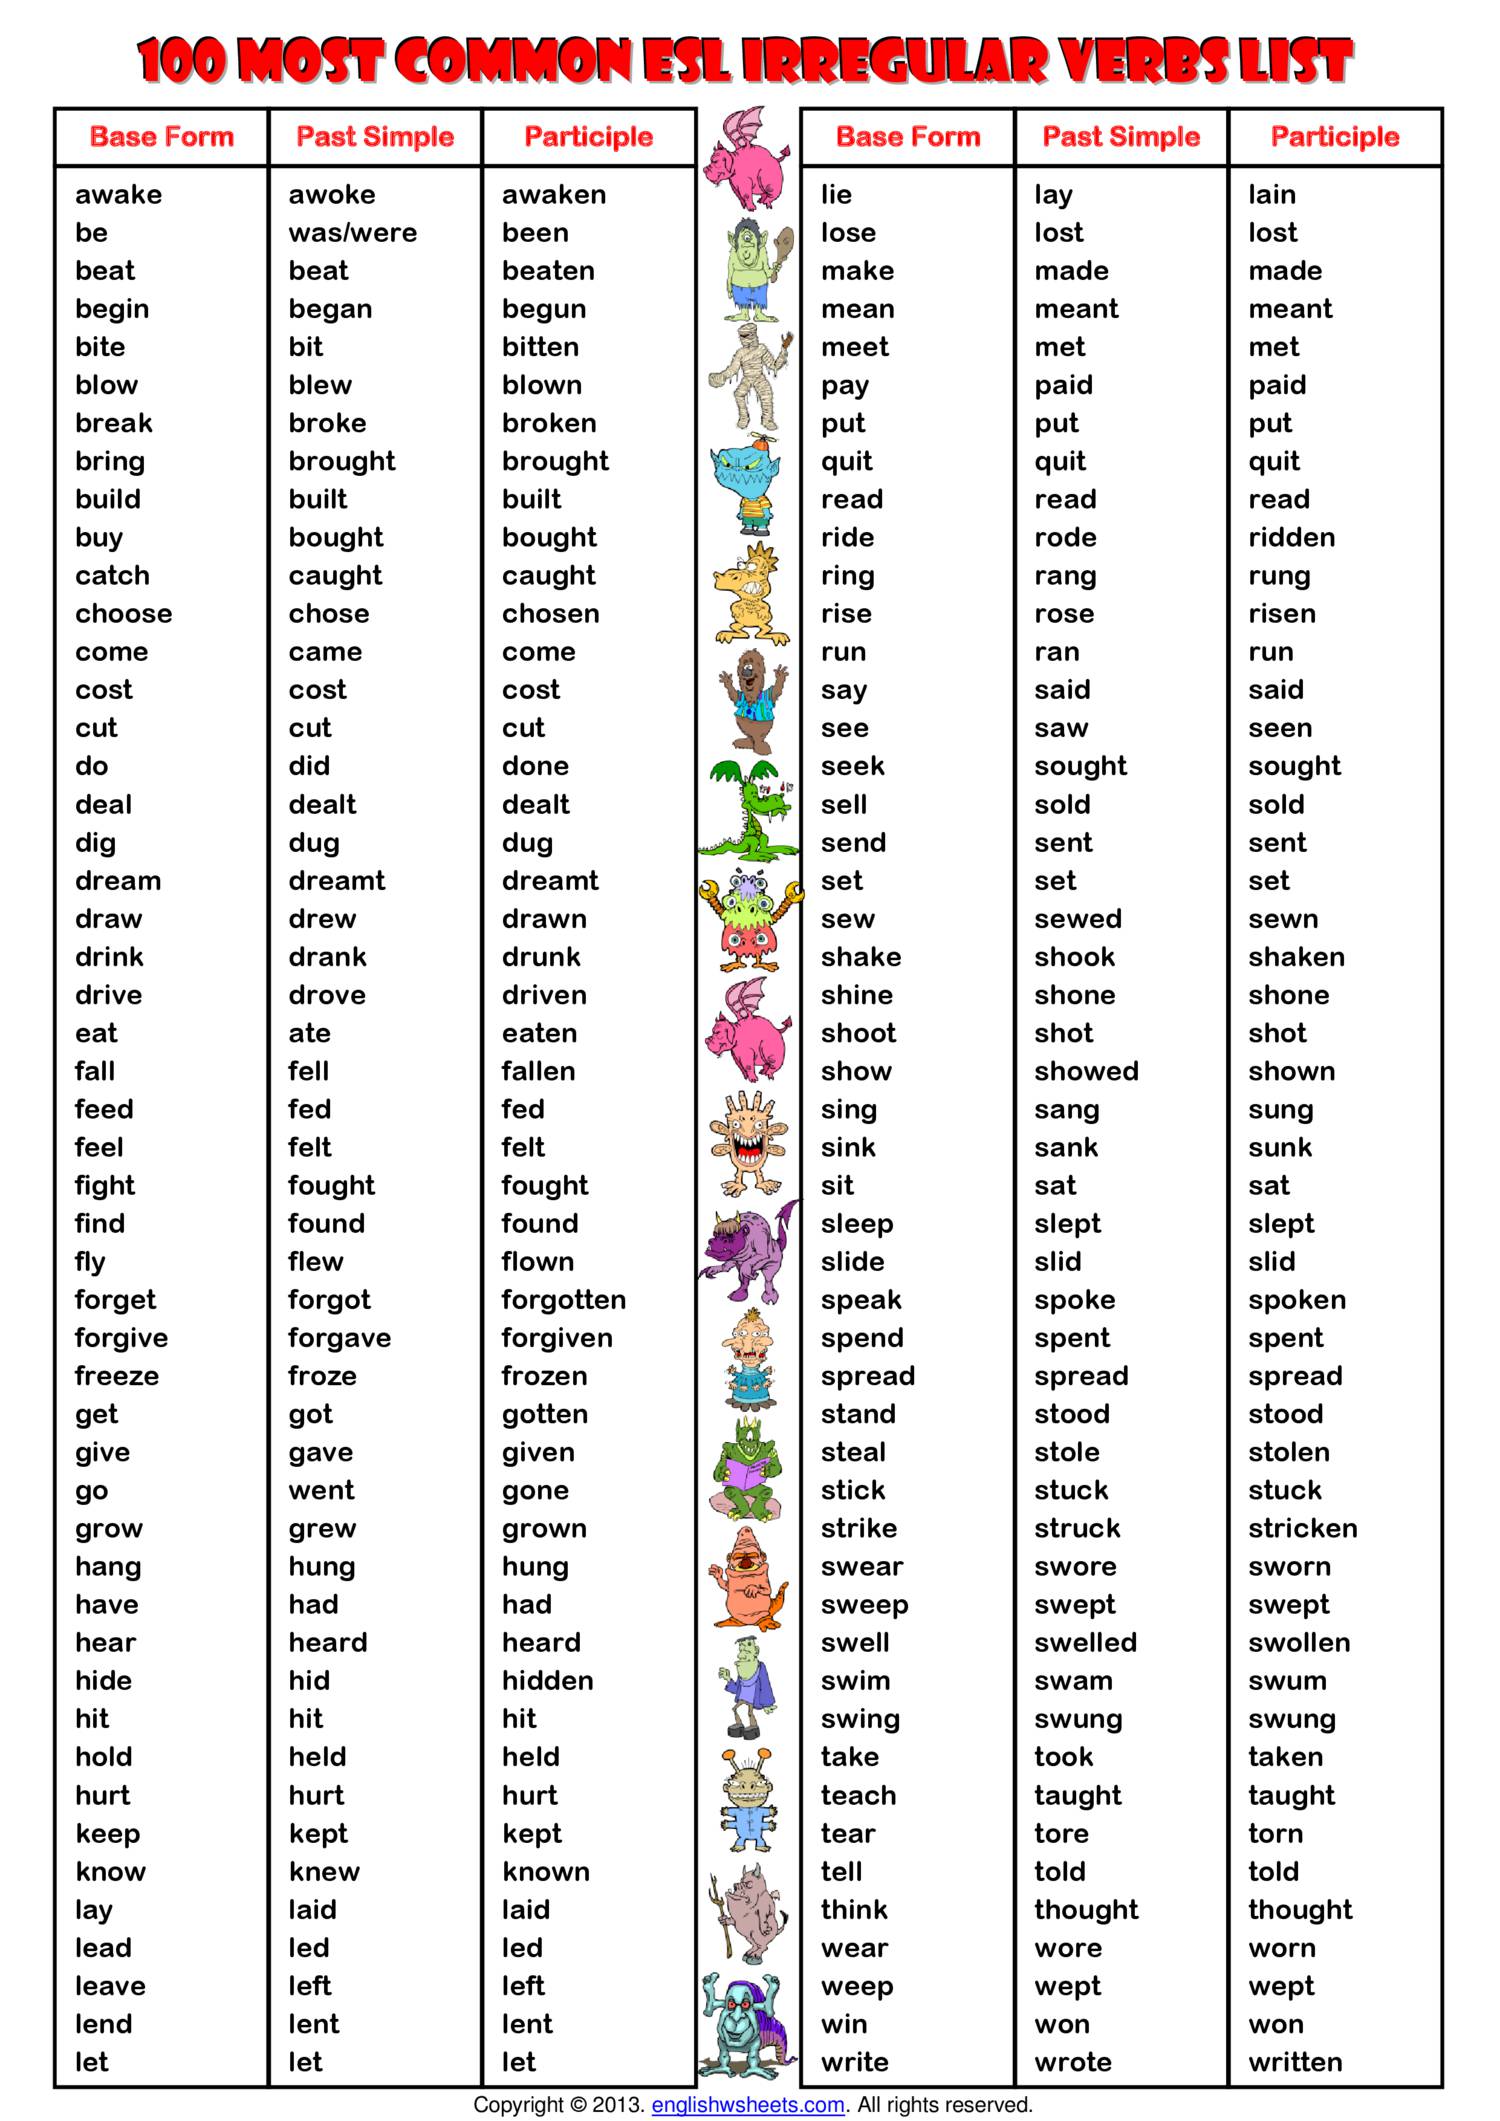 english irregular verb list pdf